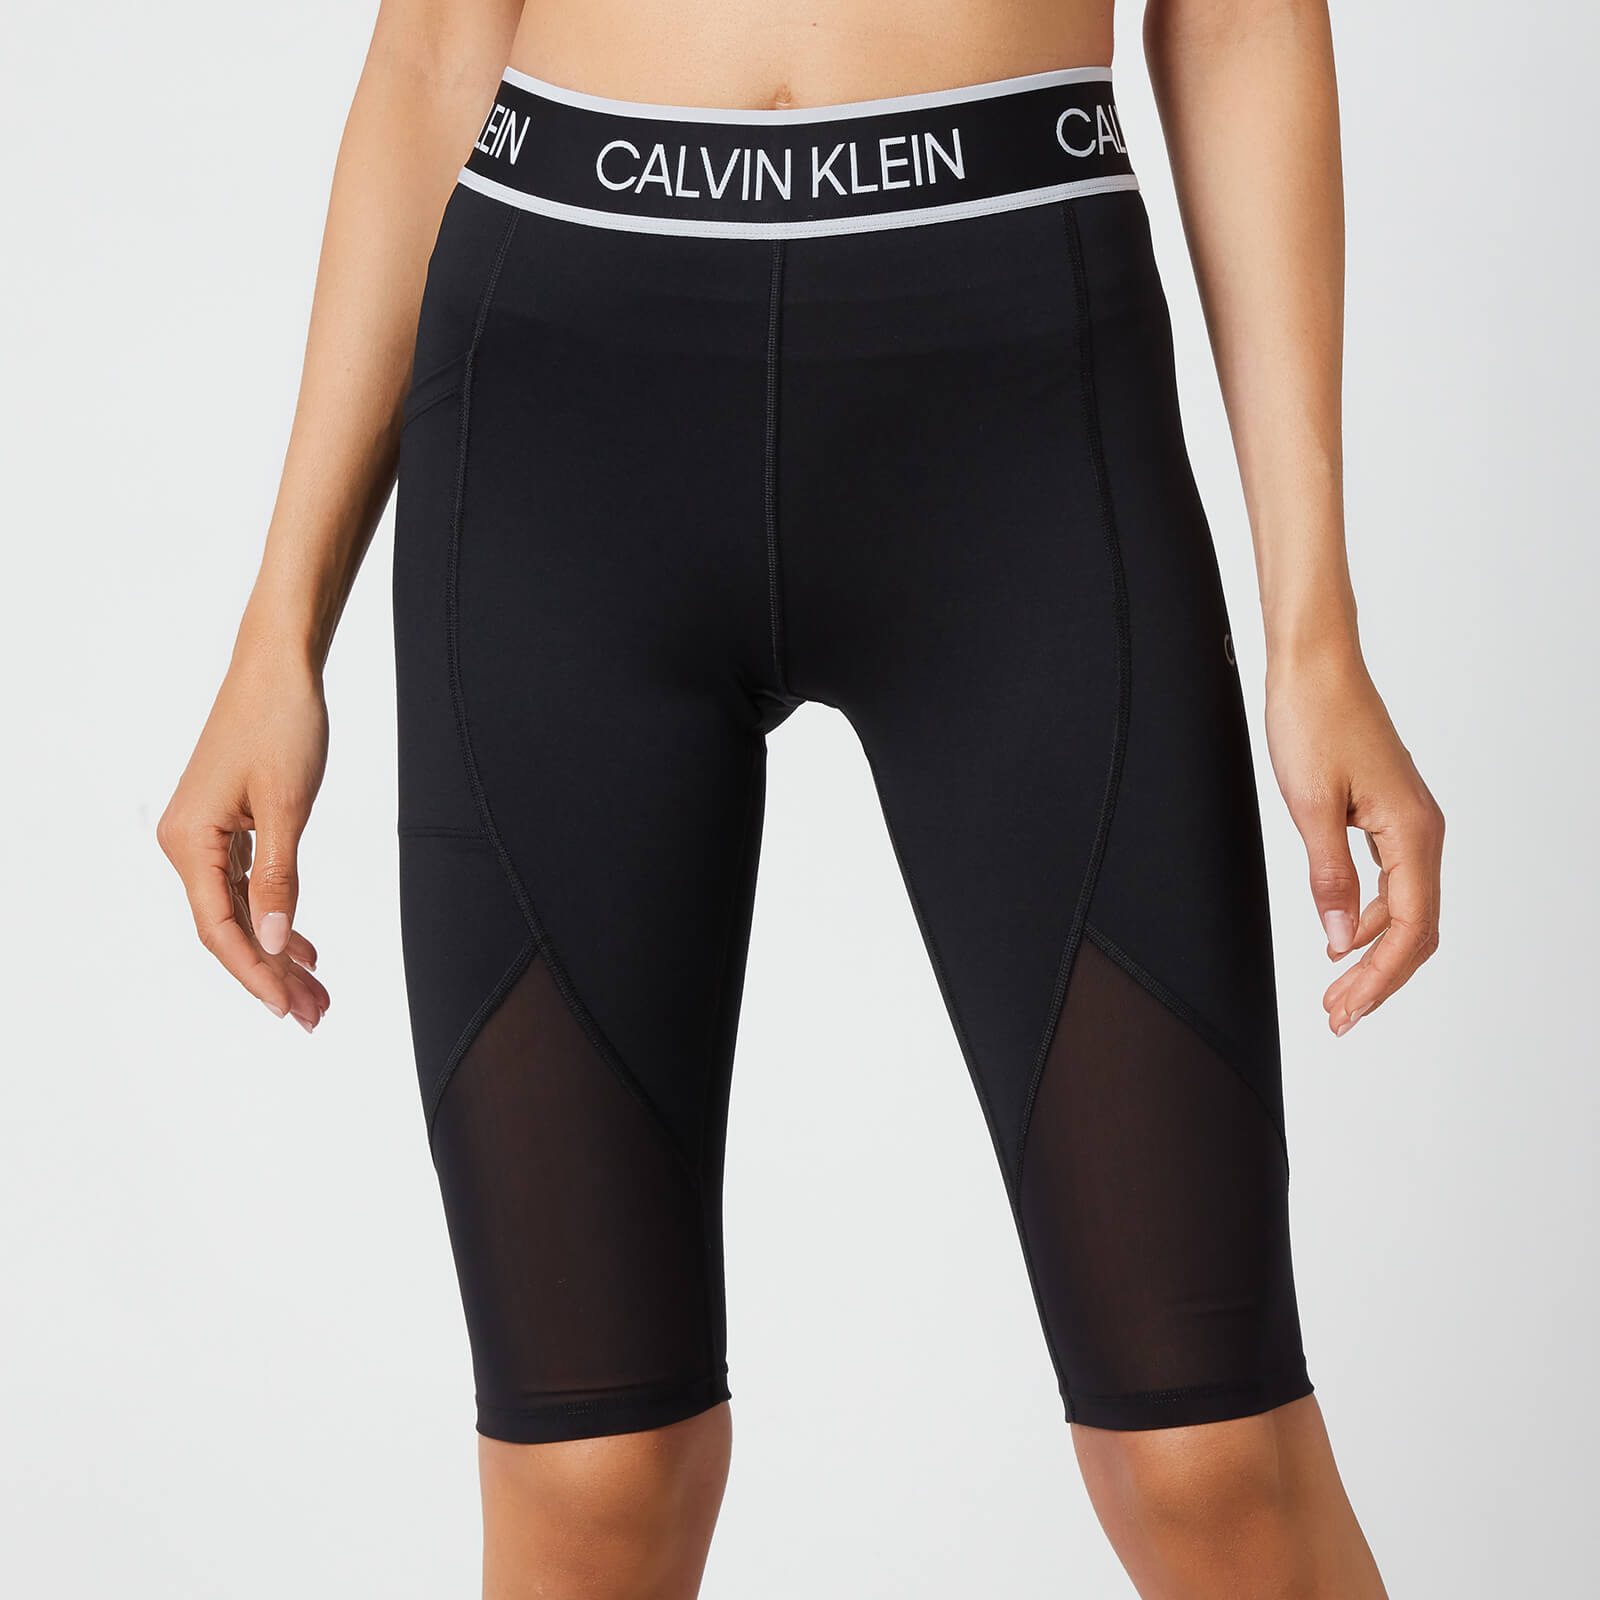 Calvin Klein Performance Women's Short Tights - CK Black - S